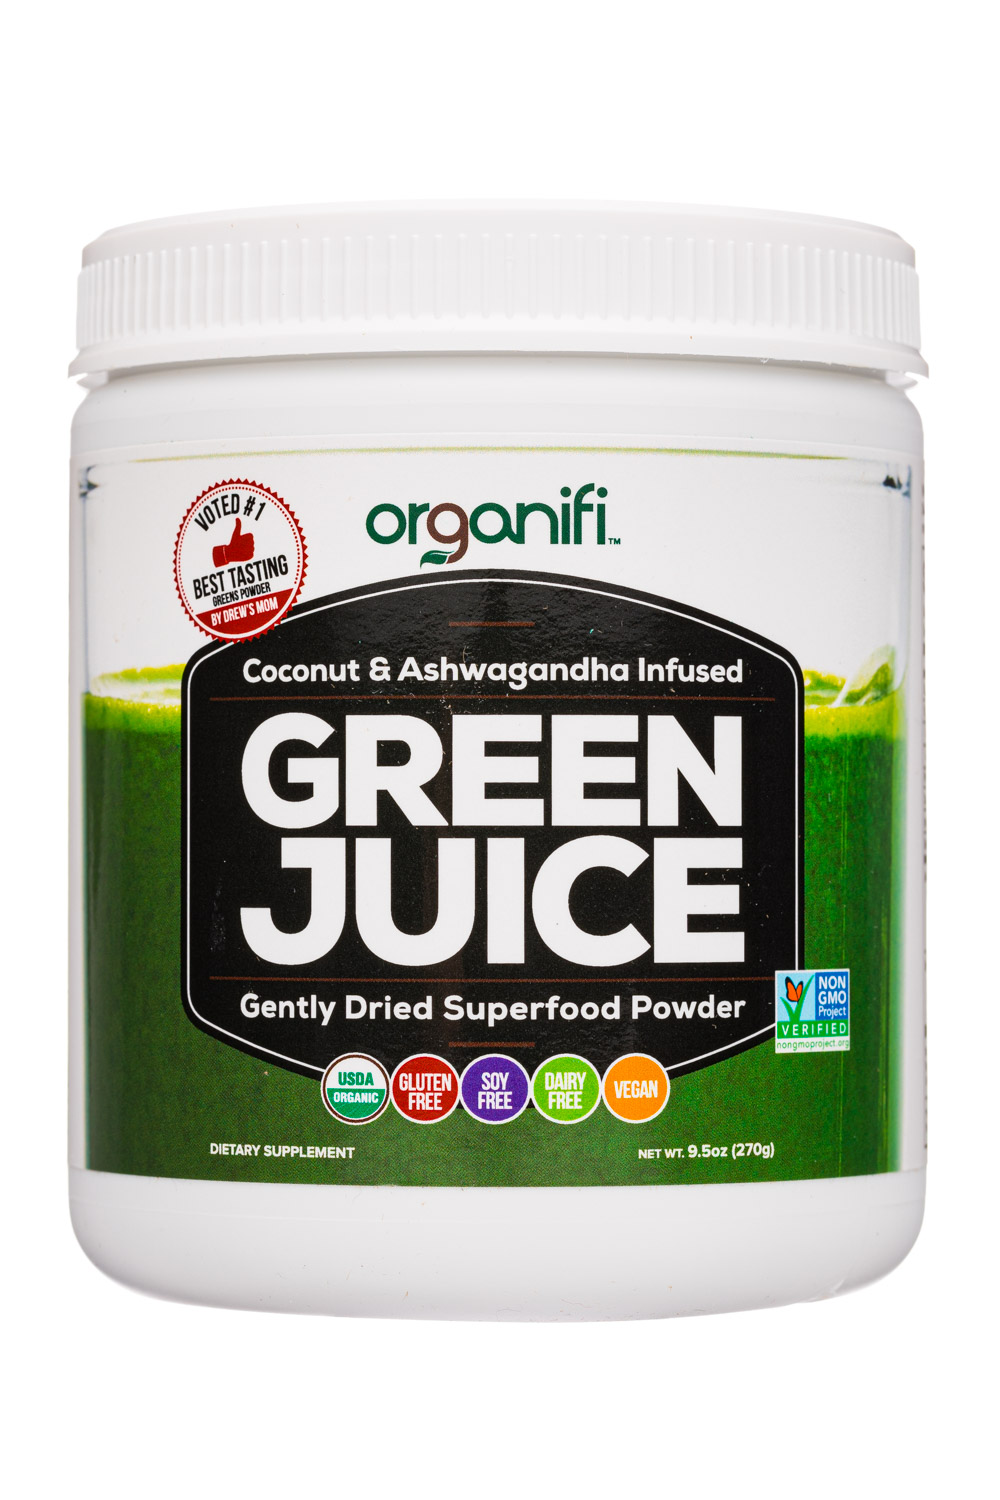 2022 Unbiased Organifi Green Juice Review + Coupon Fundamentals Explained